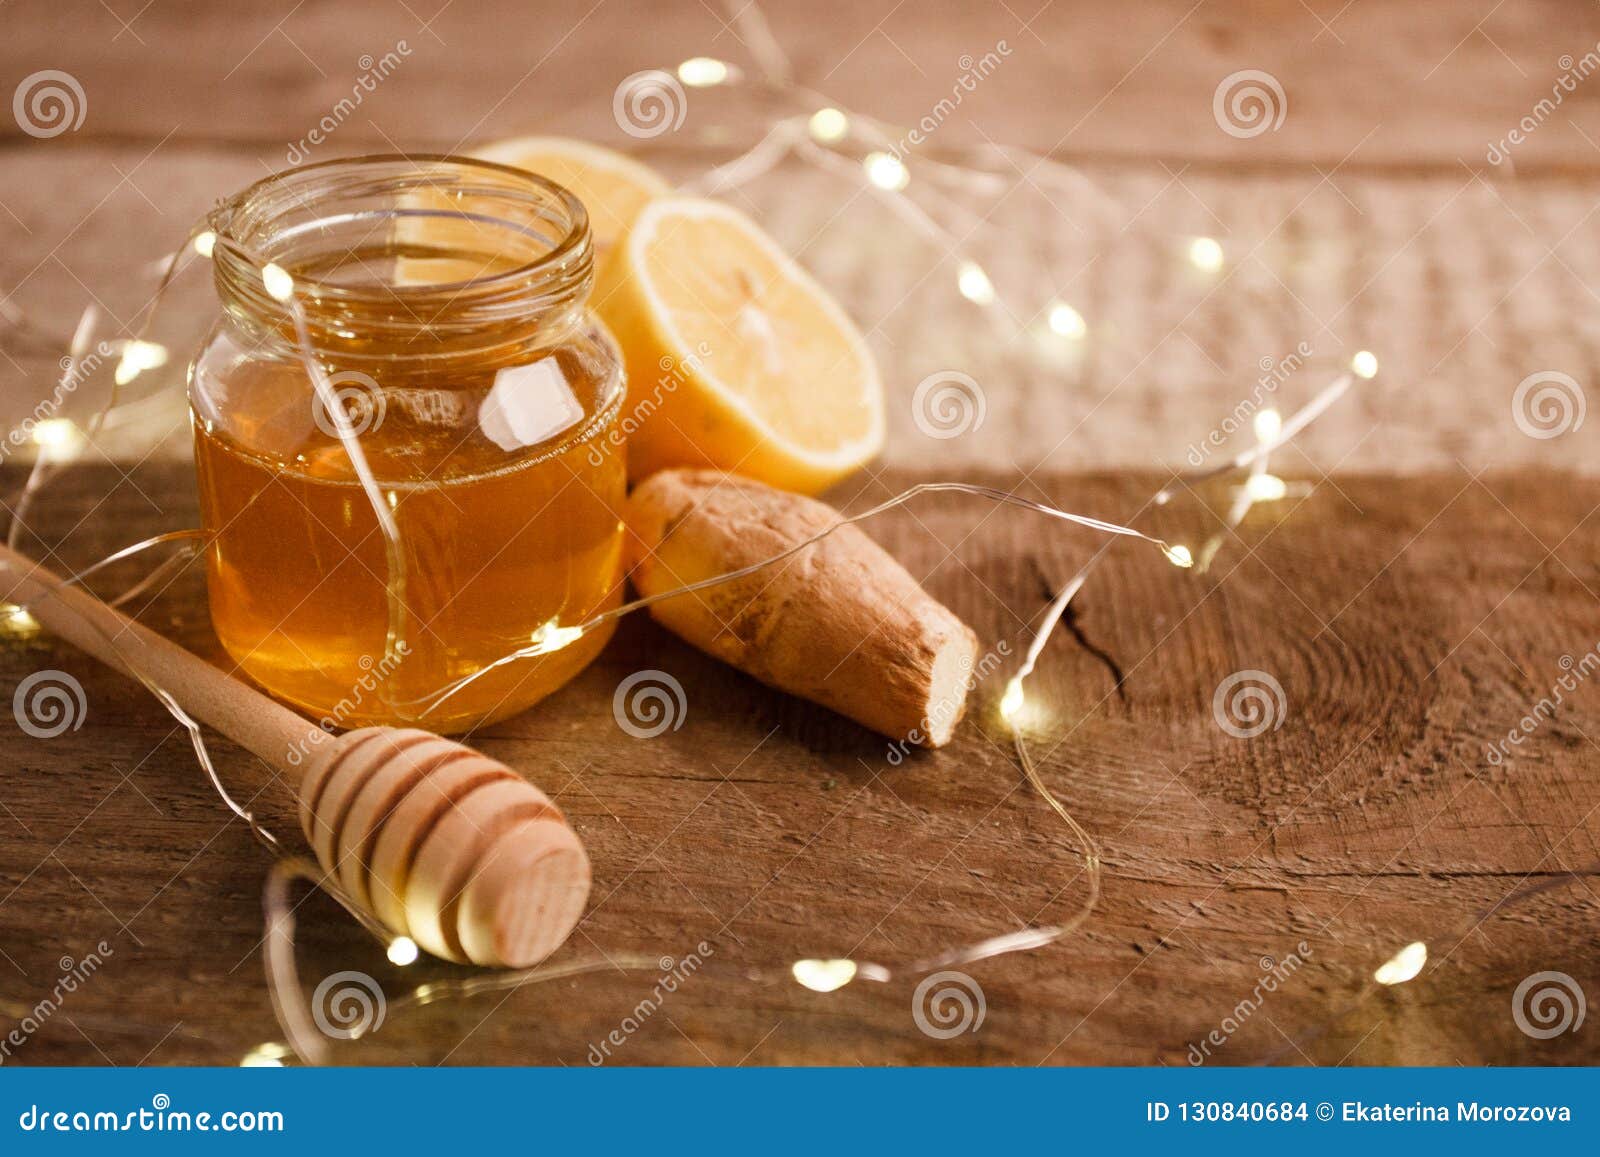 Ginger, Honey And Lemon, The Concept Of Natural Medicine ...